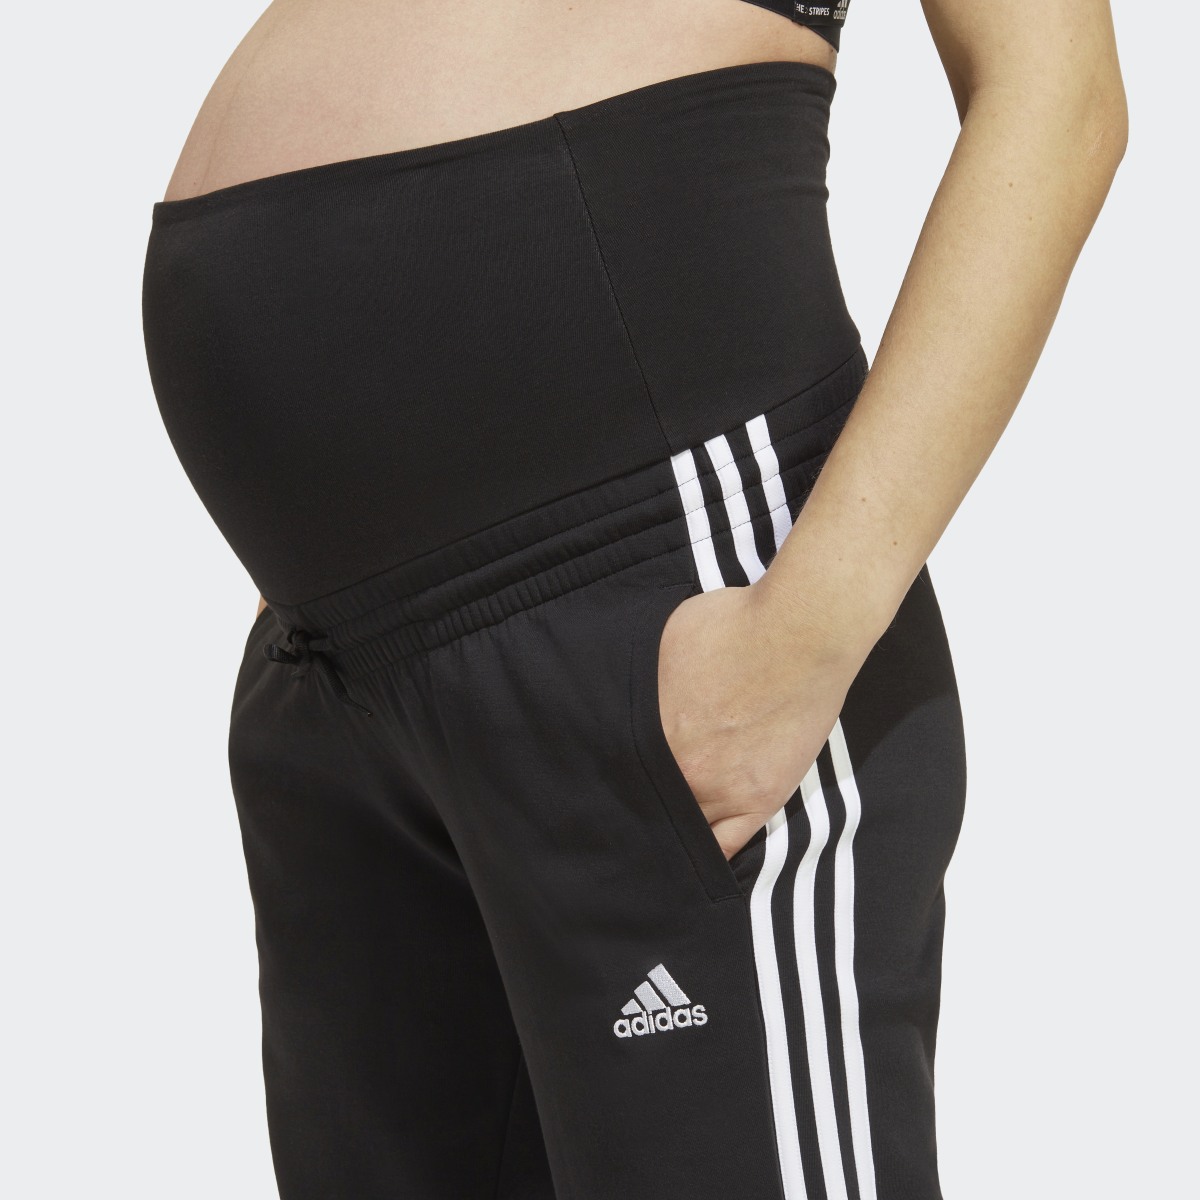 Adidas Maternity Pants. 5